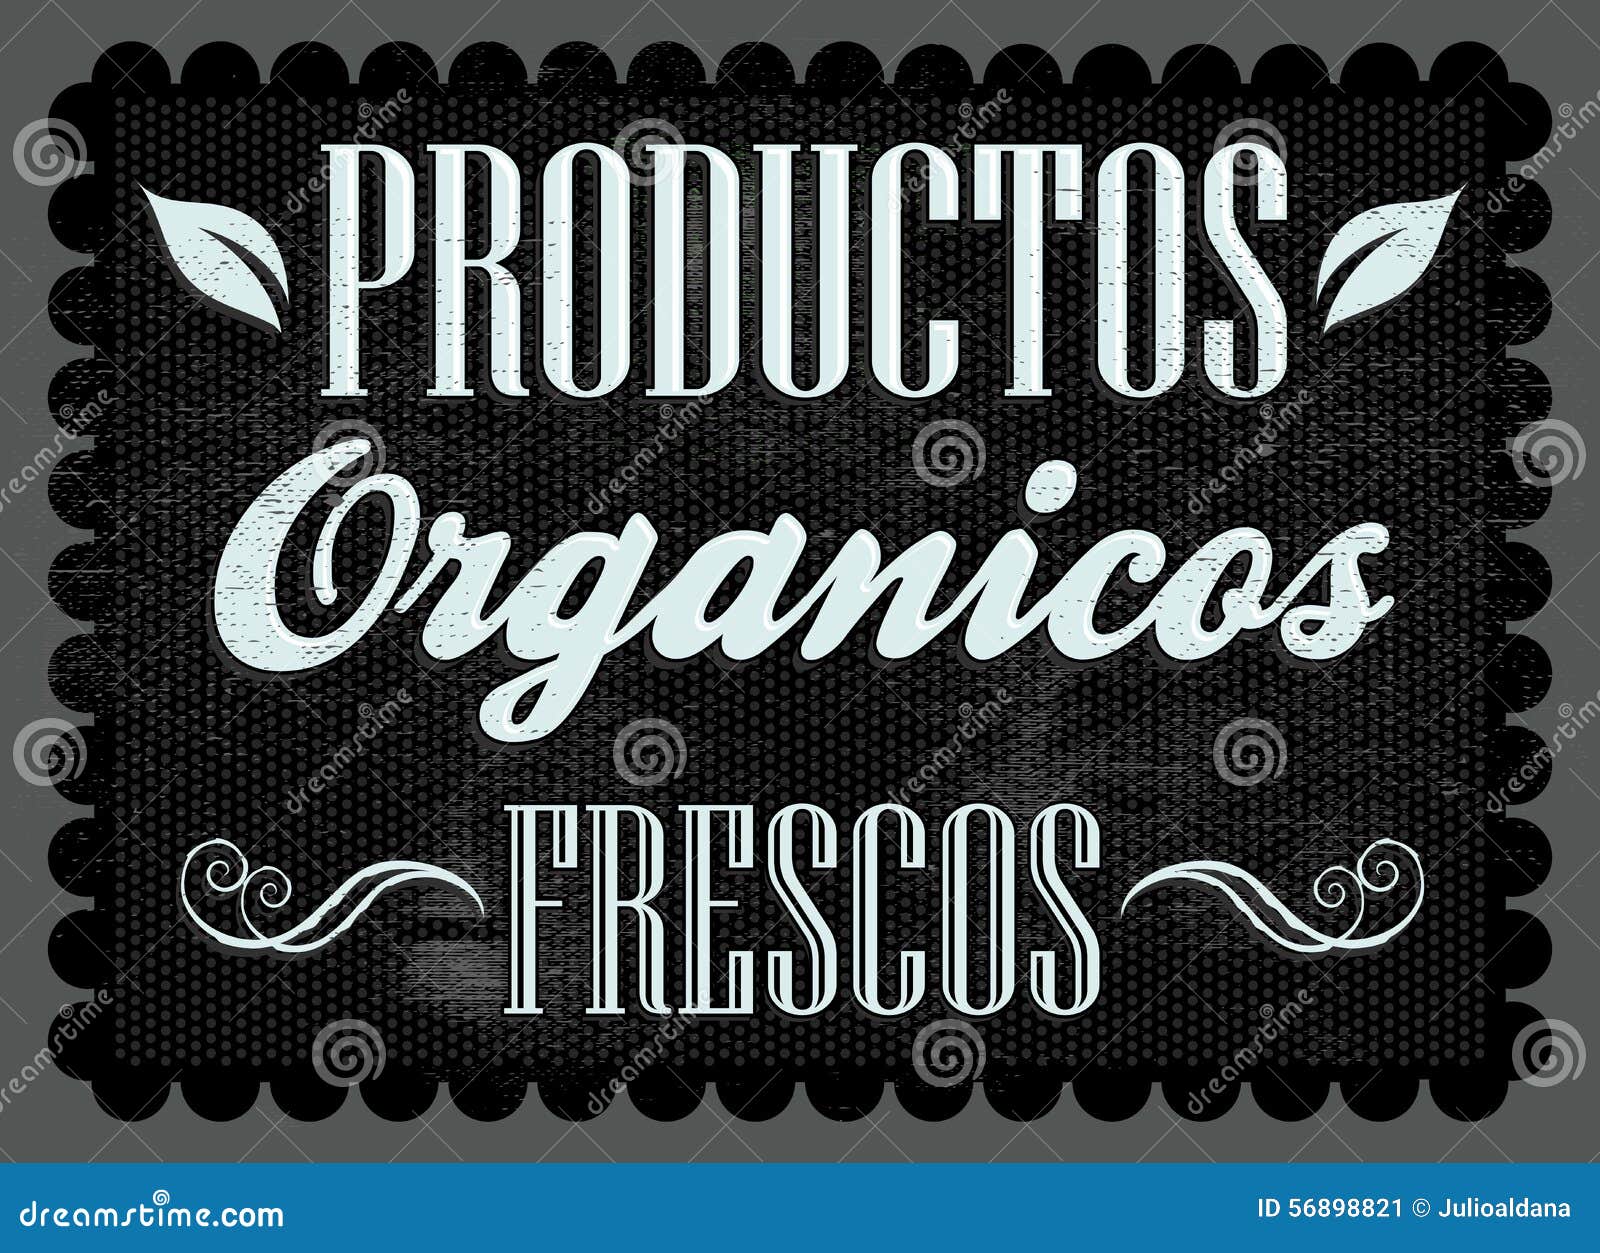 productos organicos frescos - fresh organic products spanish text